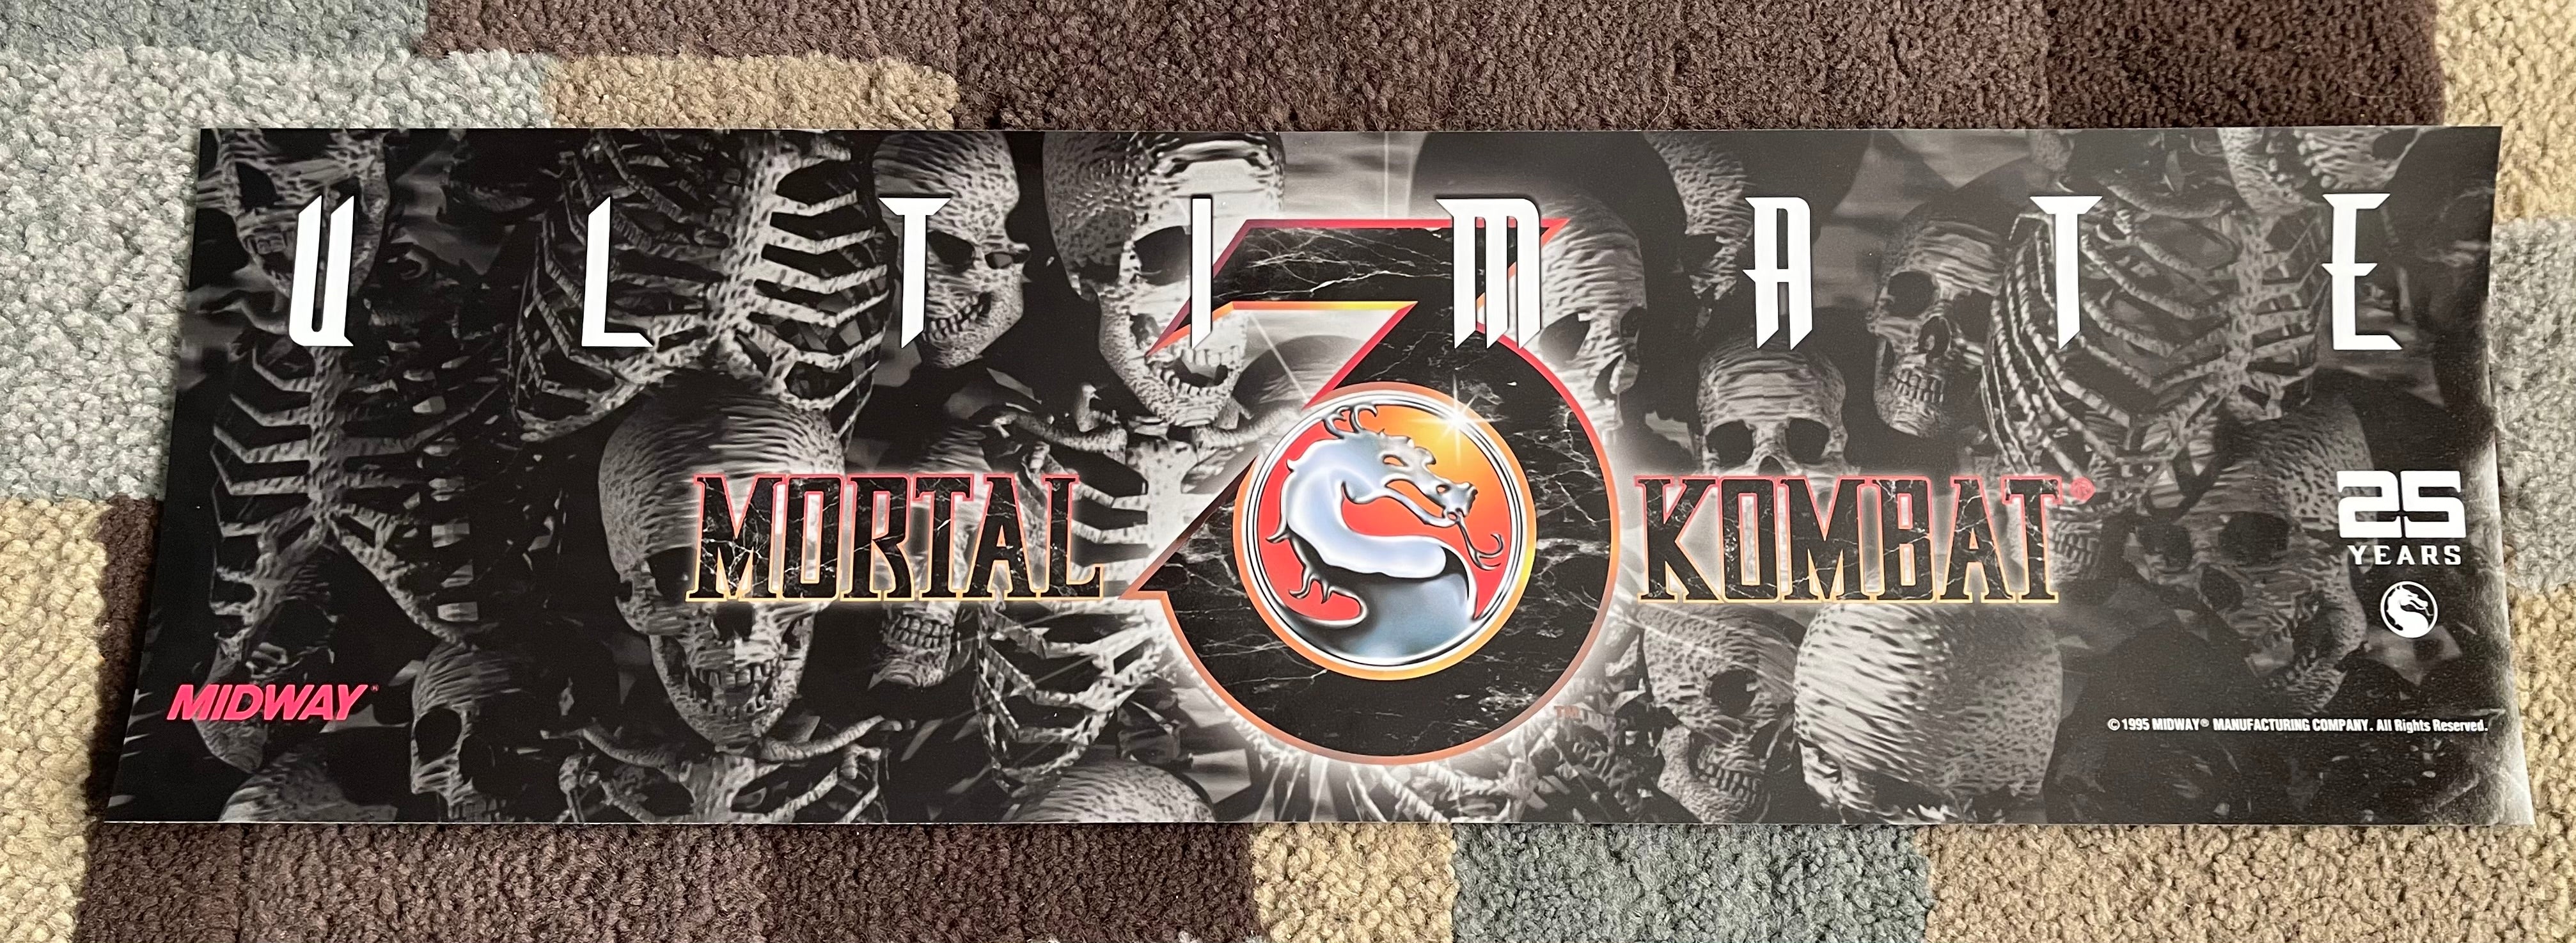 Anniversary　Mortal　Kit　Complete　Kombat　25th　Art